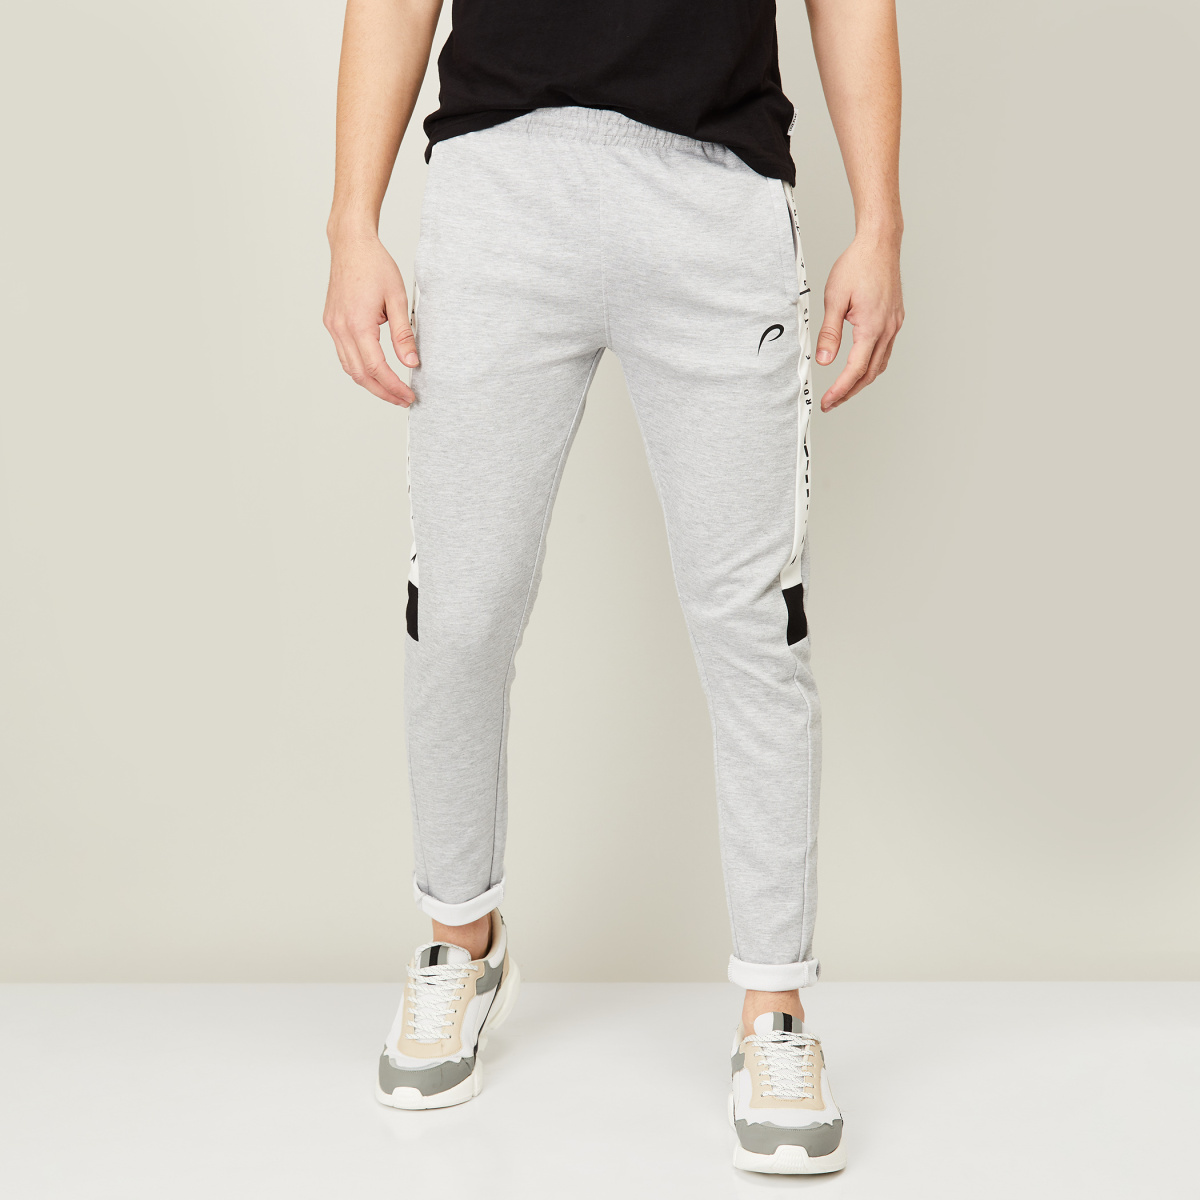 Buy Proline Grey Cotton Comfort Fit Striped Track Pants for Mens Online   Tata CLiQ